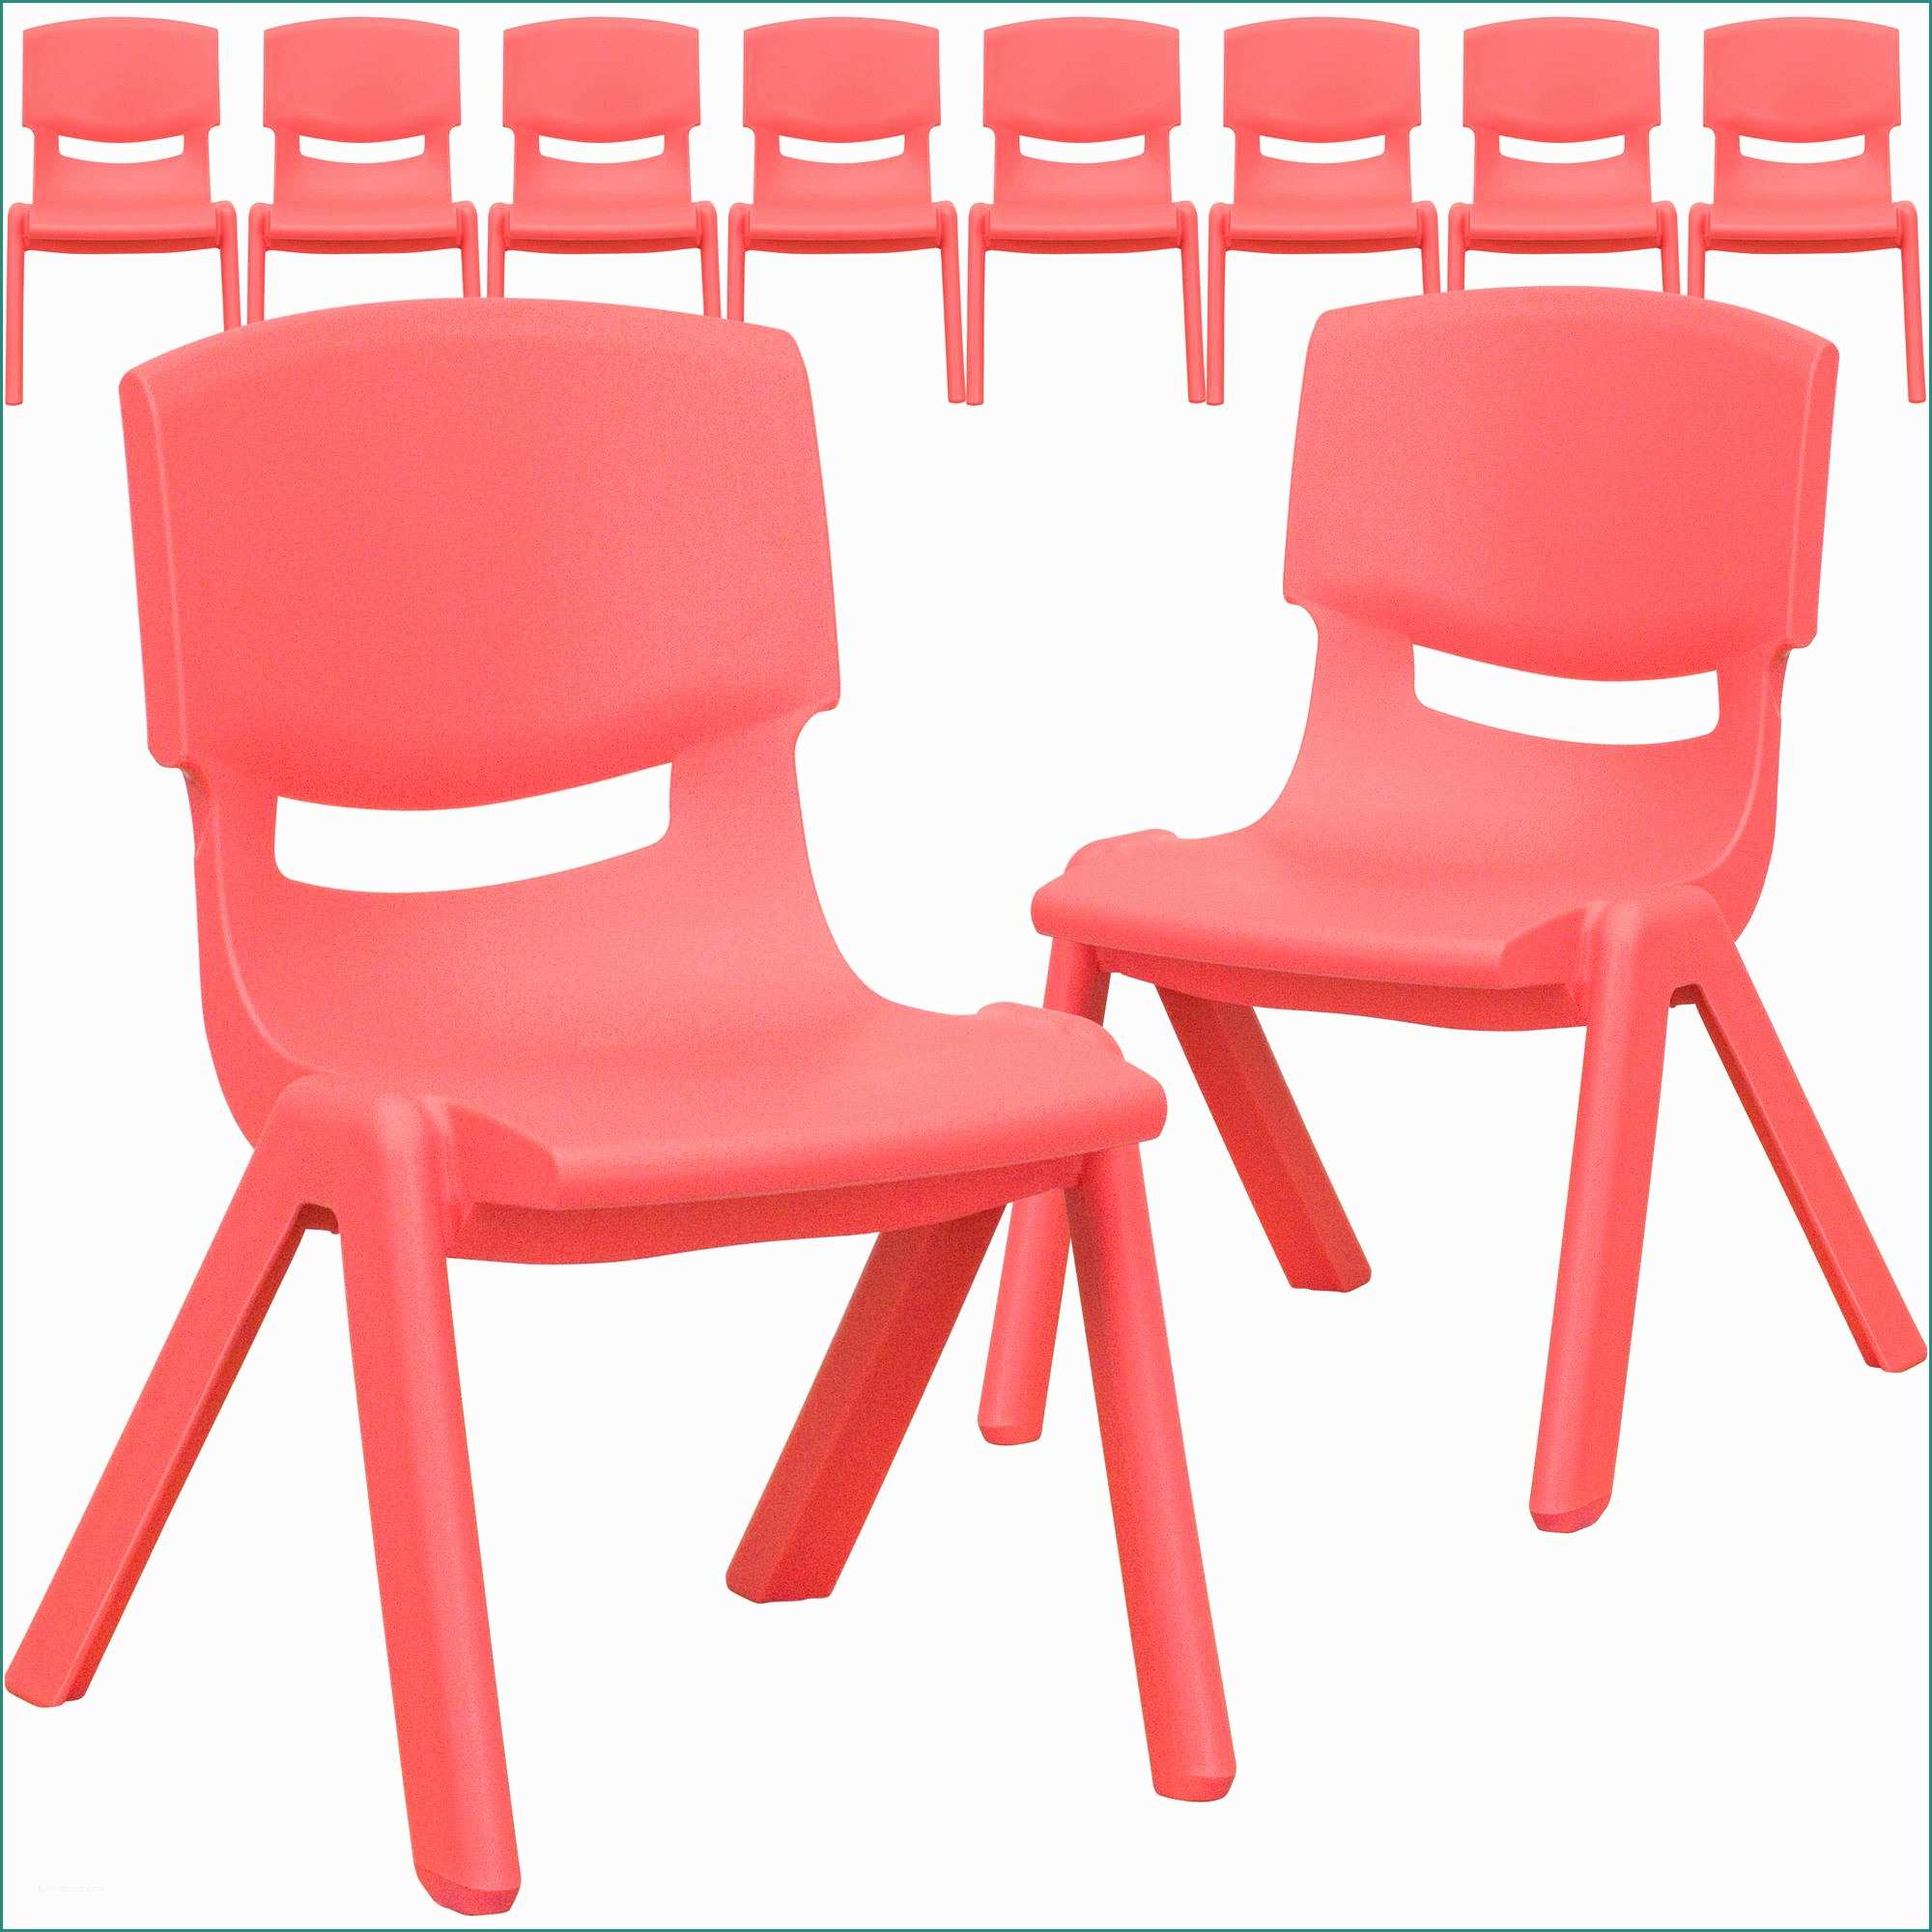 school chair wonderful red school chair free